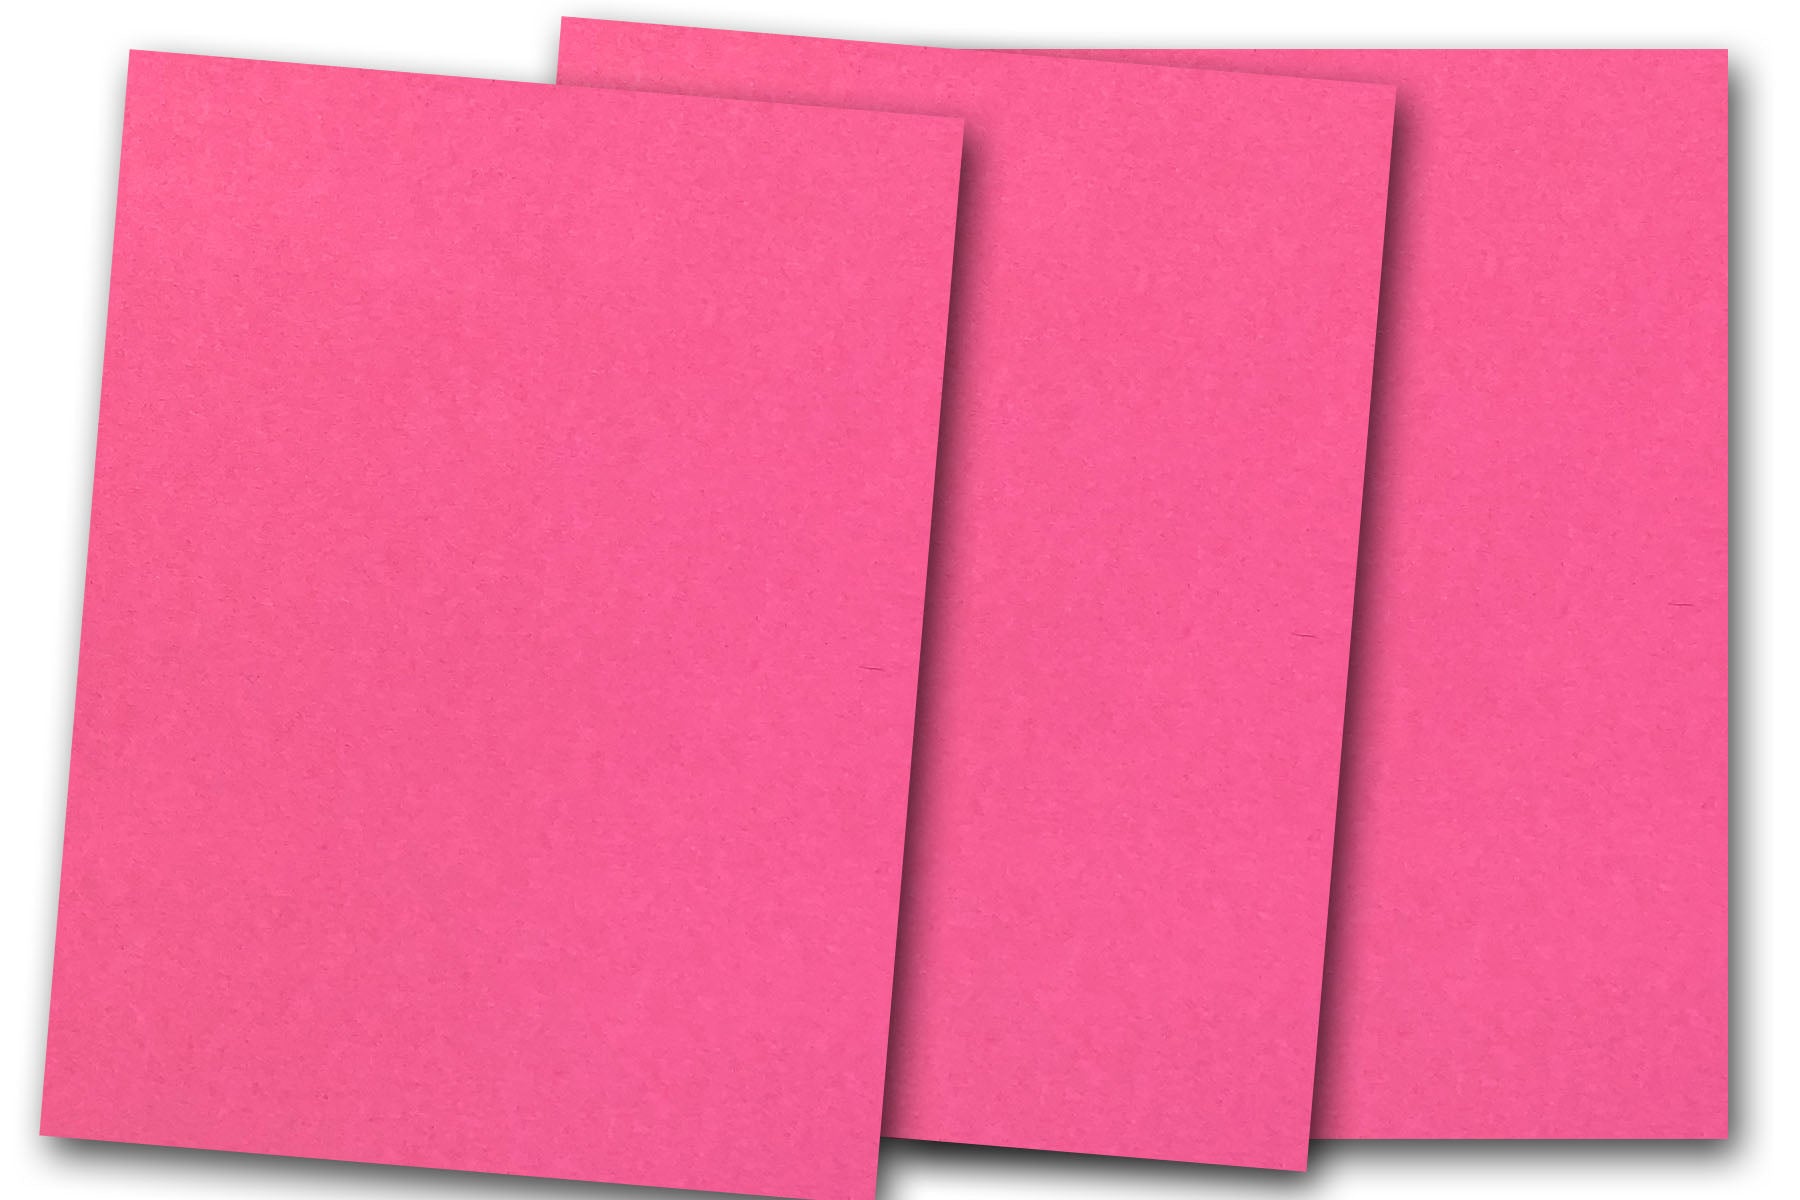 Pink Card Stock - Fine Cardstock